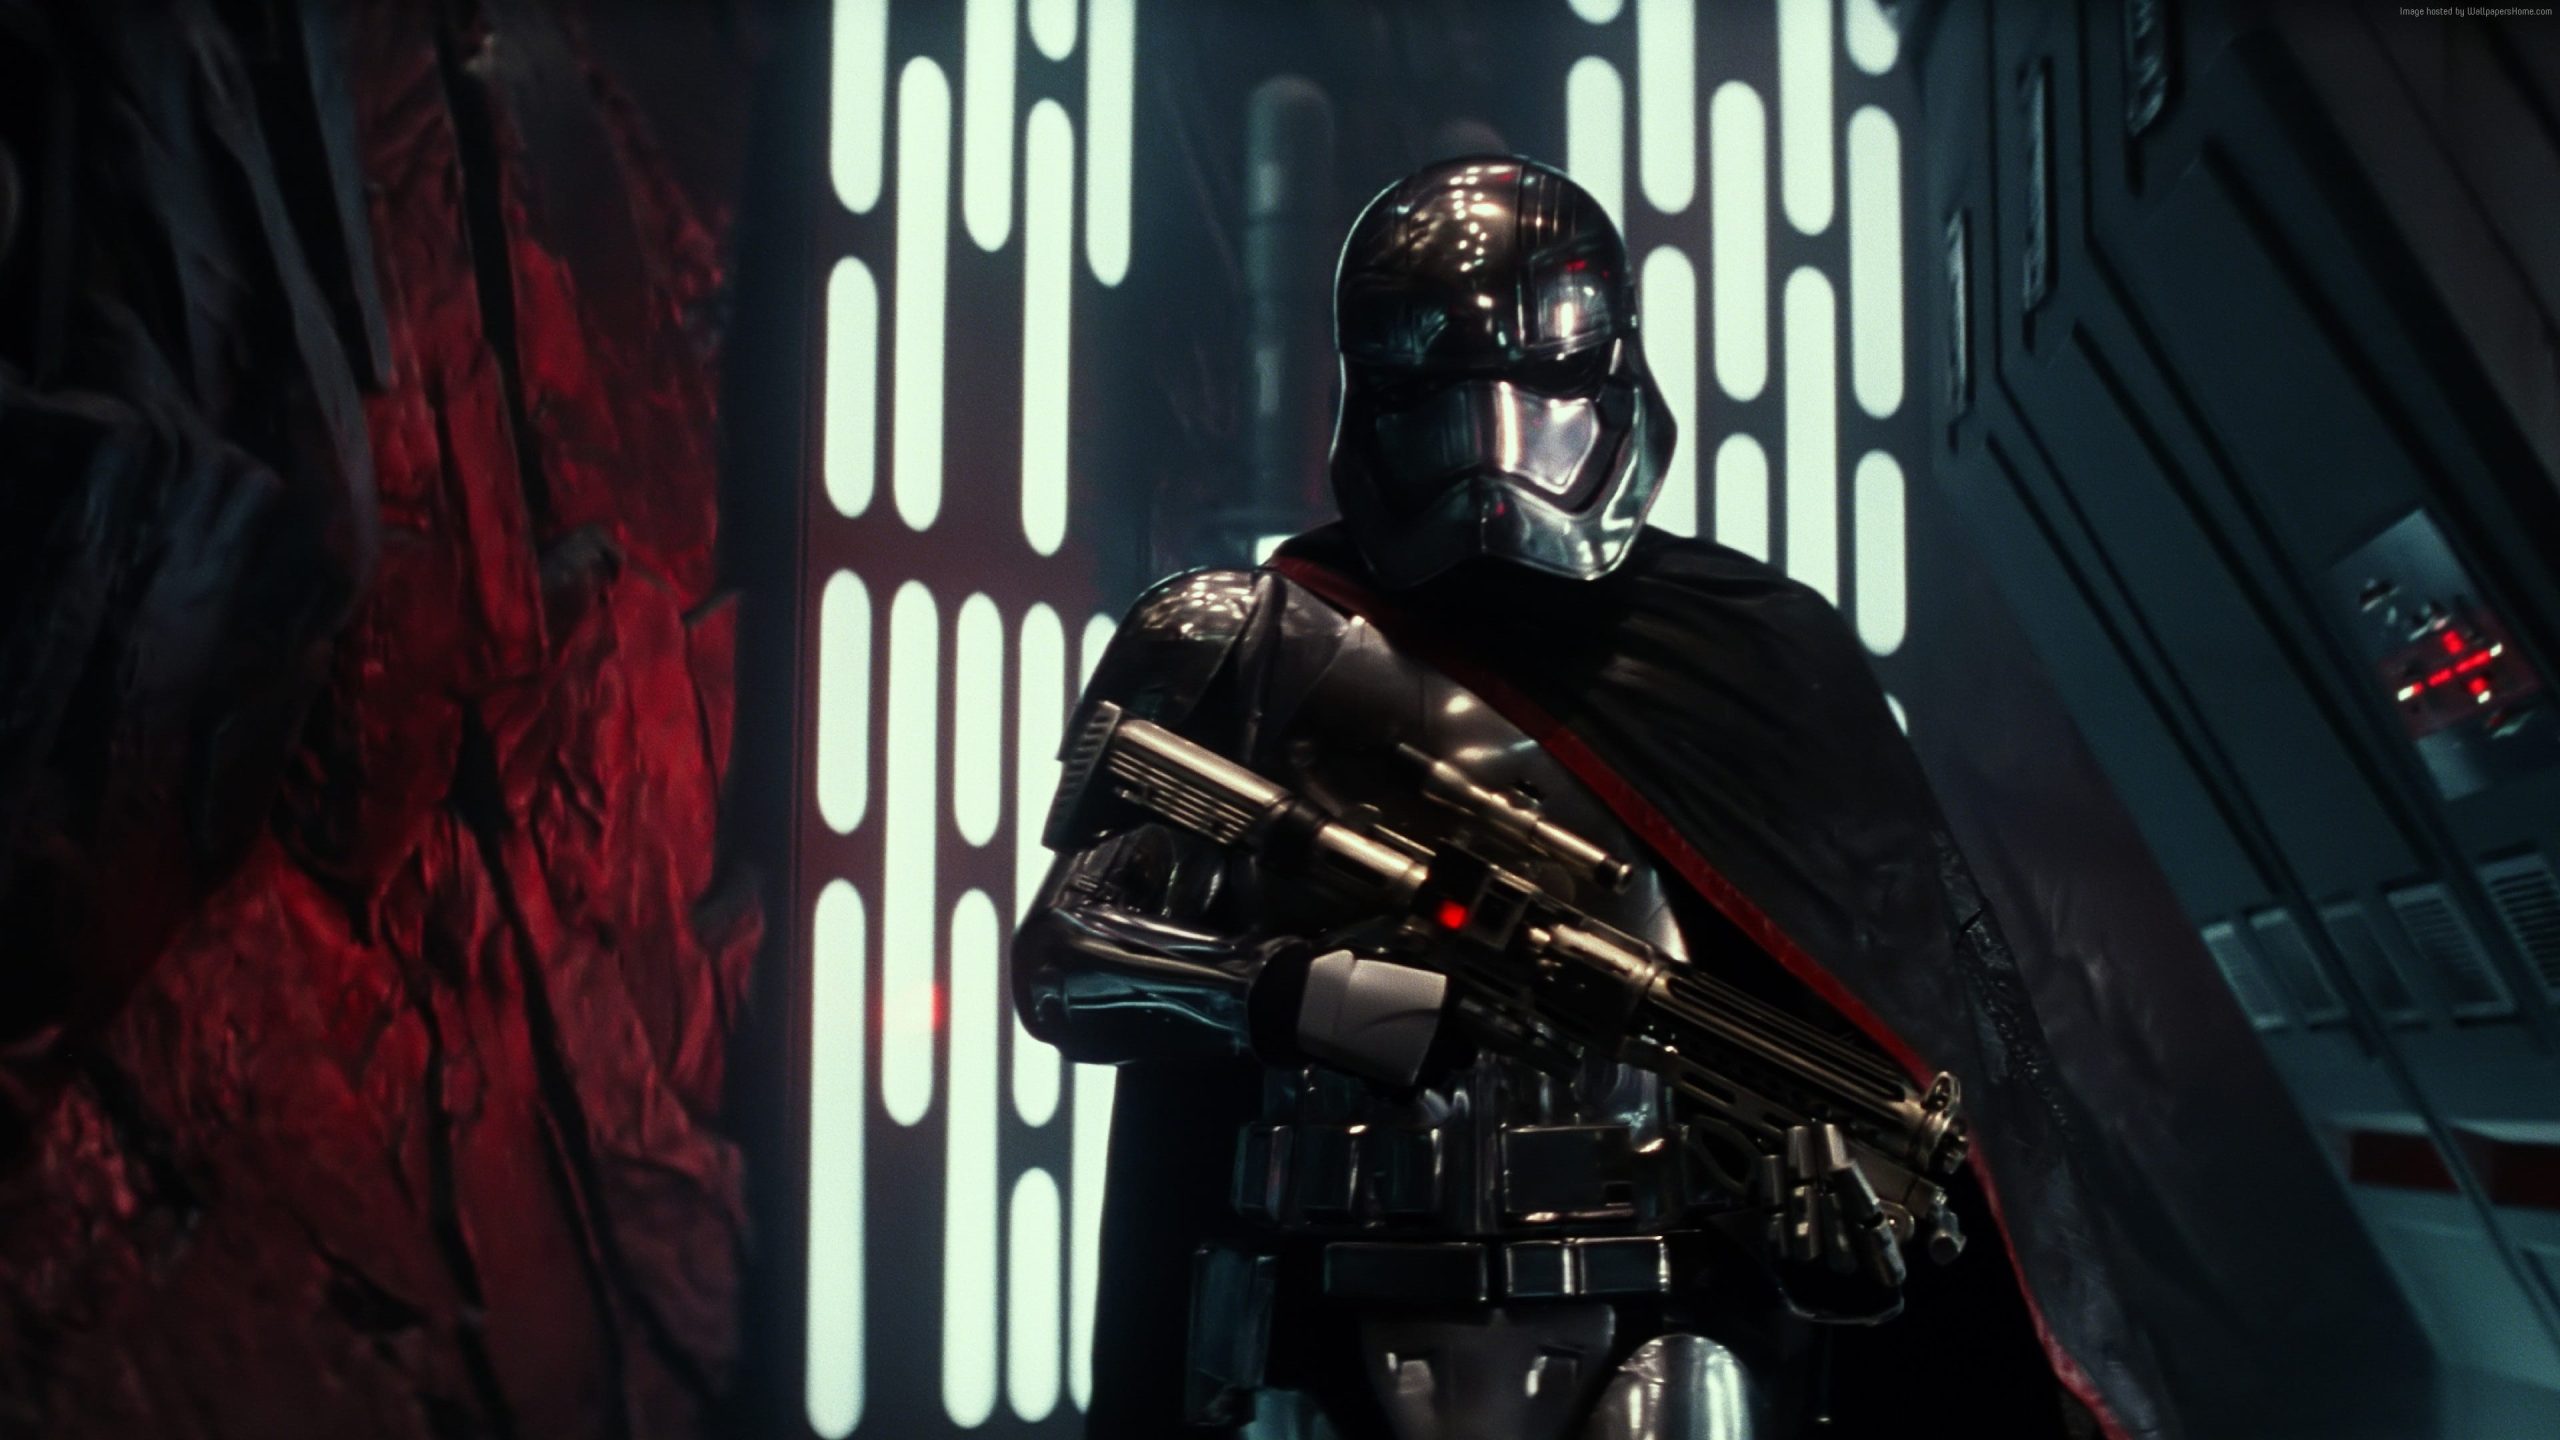 دانلود فیلم Star Wars Episode VII – The Force Awakens